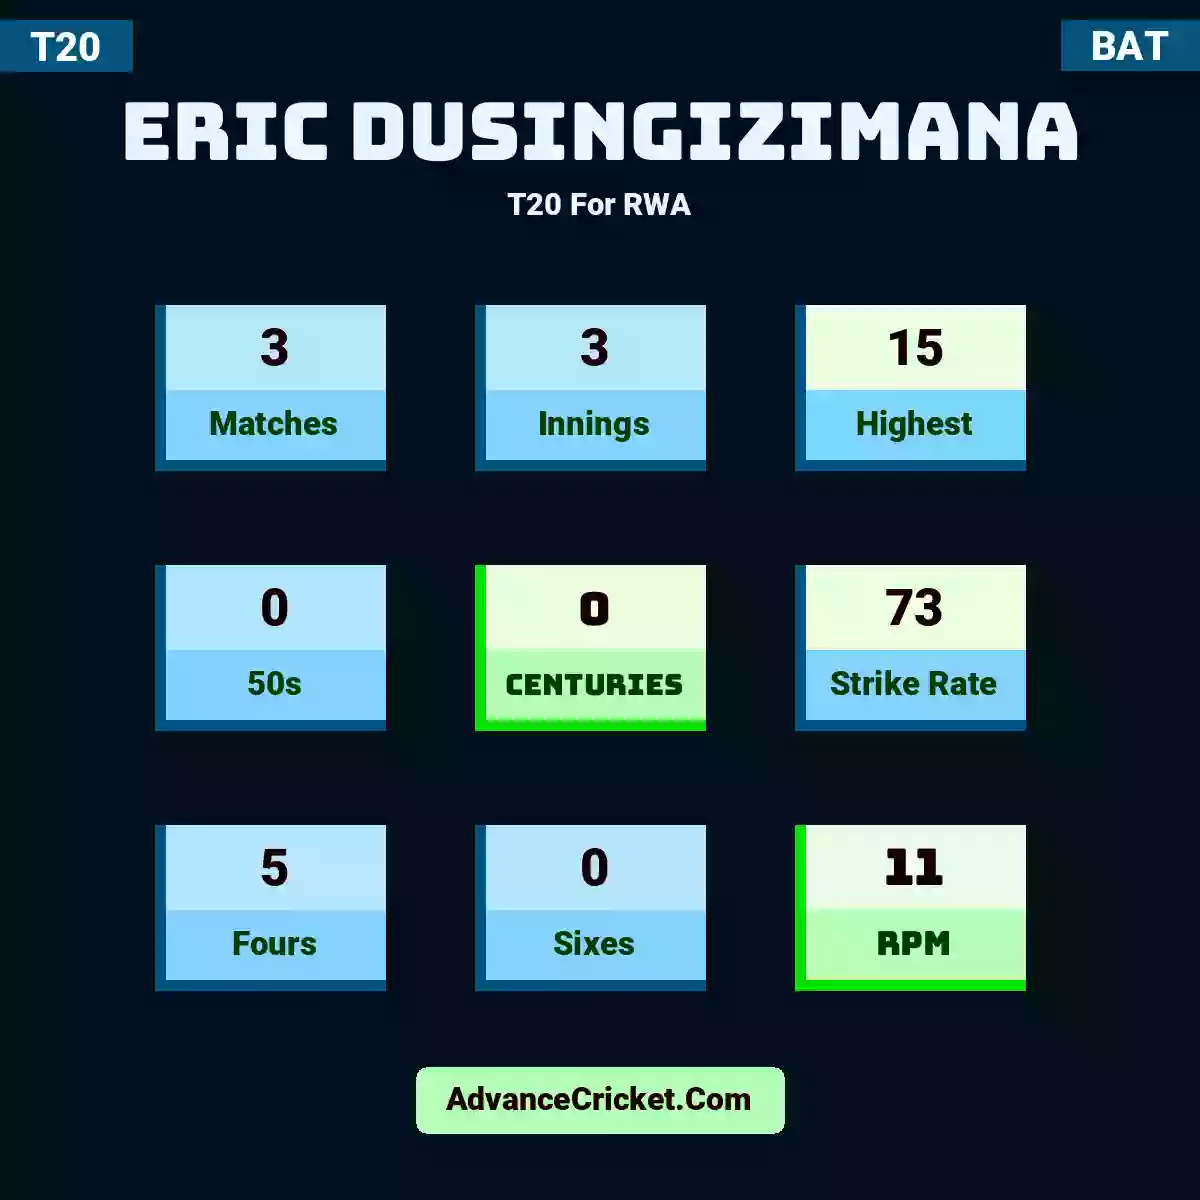 Eric Dusingizimana T20  For RWA, Eric Dusingizimana played 3 matches, scored 15 runs as highest, 0 half-centuries, and 0 centuries, with a strike rate of 73. E.Dusingizimana hit 5 fours and 0 sixes, with an RPM of 11.